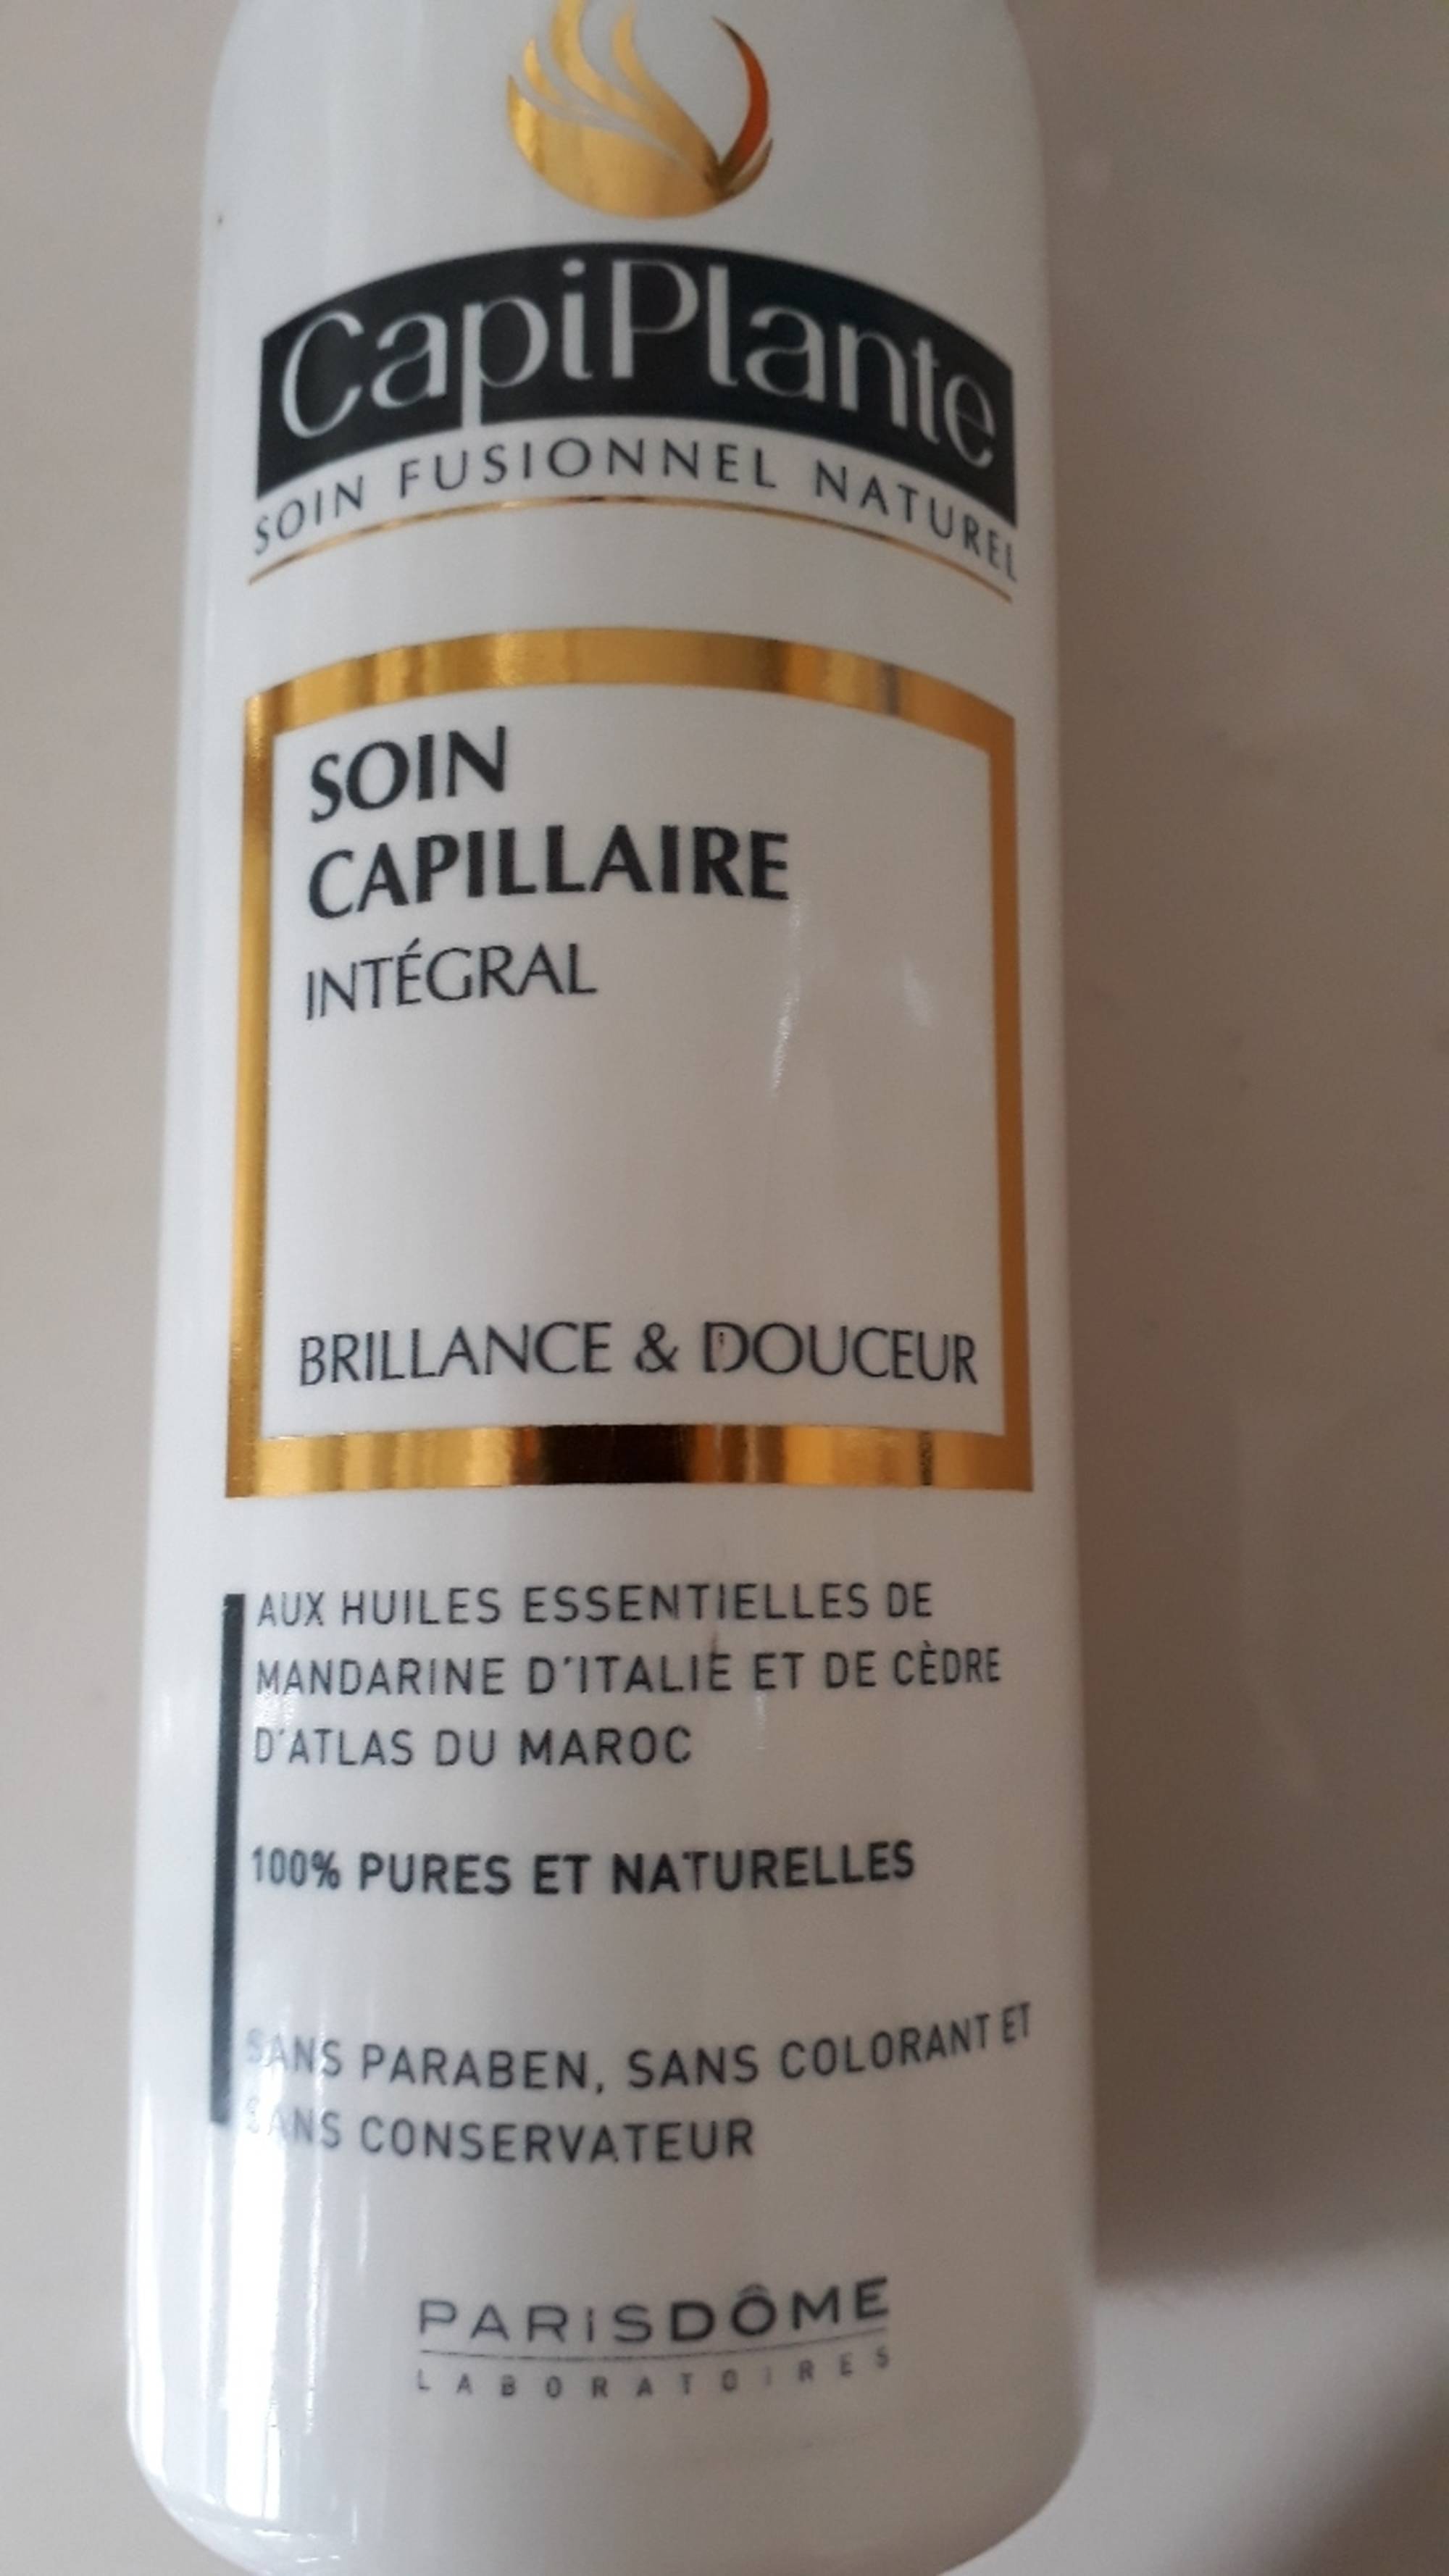 CAPIPLANTE - Soin capillaire brillance & douceur